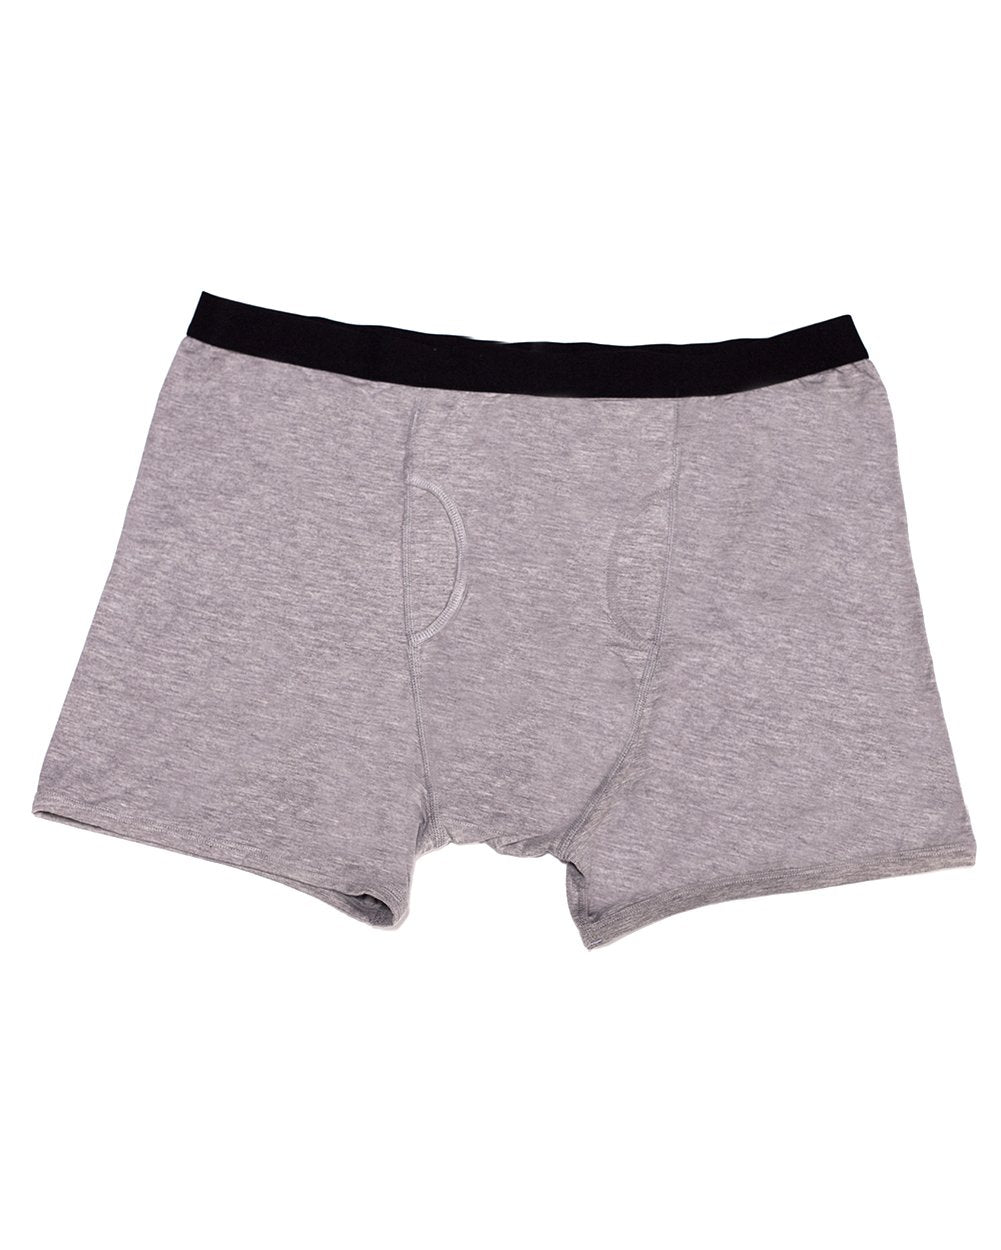 Pocket Underwear for Men with Secret Hidden Front Stash Pocket, Travel  Boxer Brief, Small Size 2 Packs (Black) at  Men's Clothing store